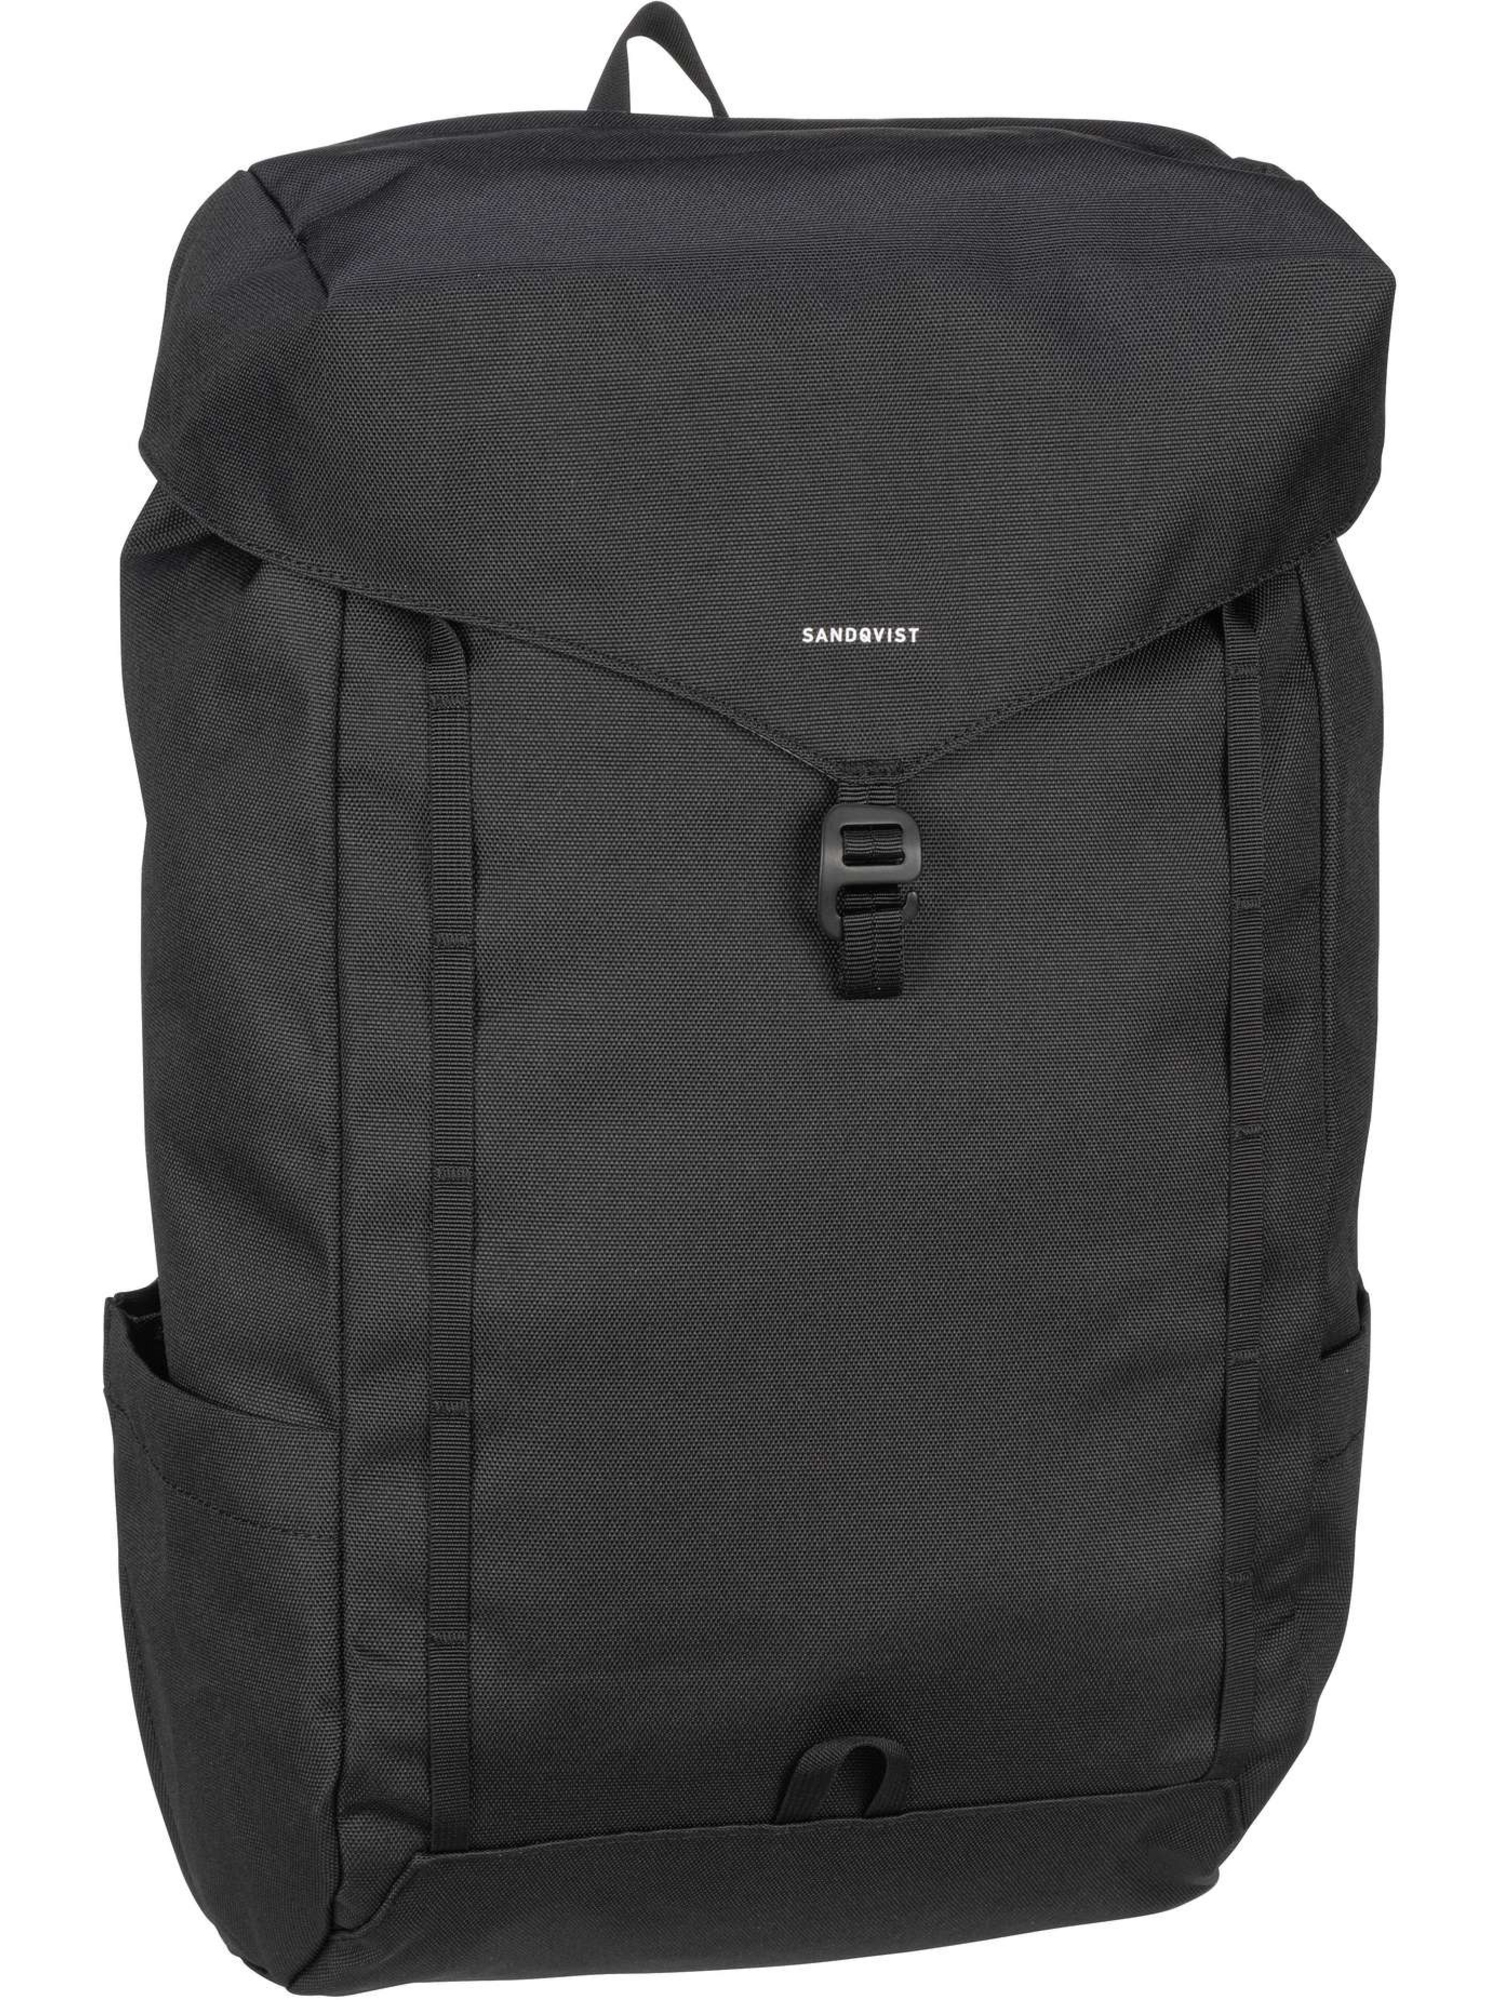 Рюкзак SANDQVIST/Backpack Walter Backpack, черный рюкзак sandqvist walter multi green